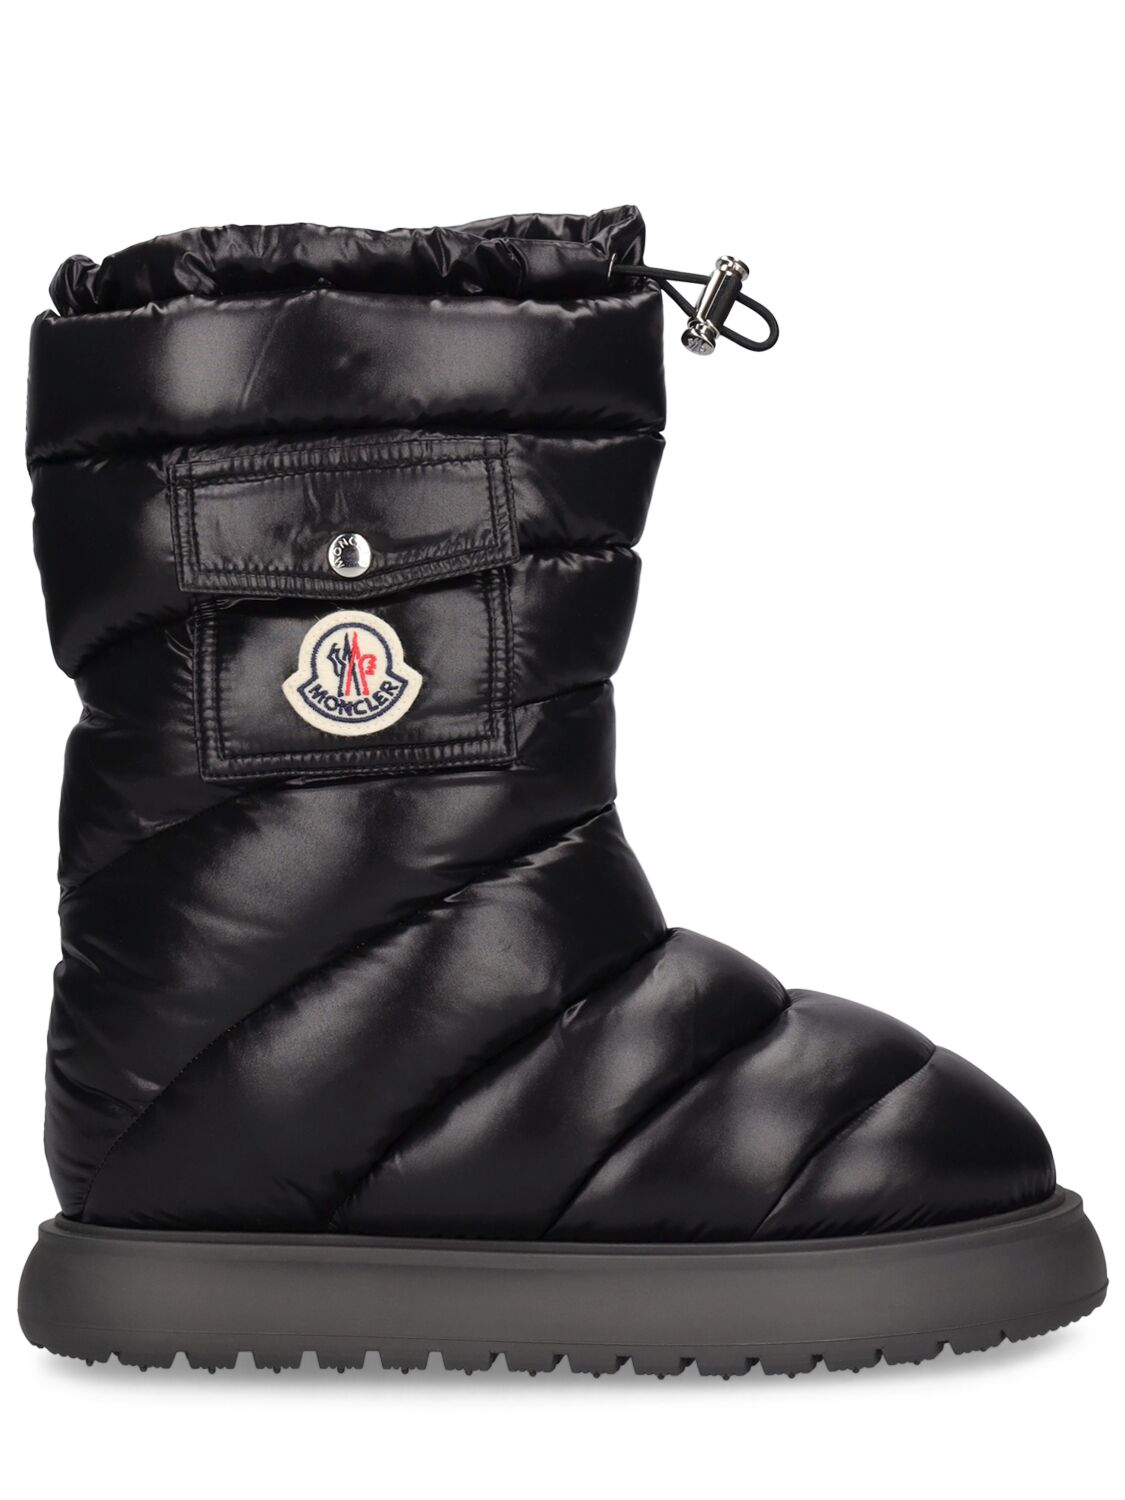 Image of Gaia Pocket Mid Nylon Snow Boots